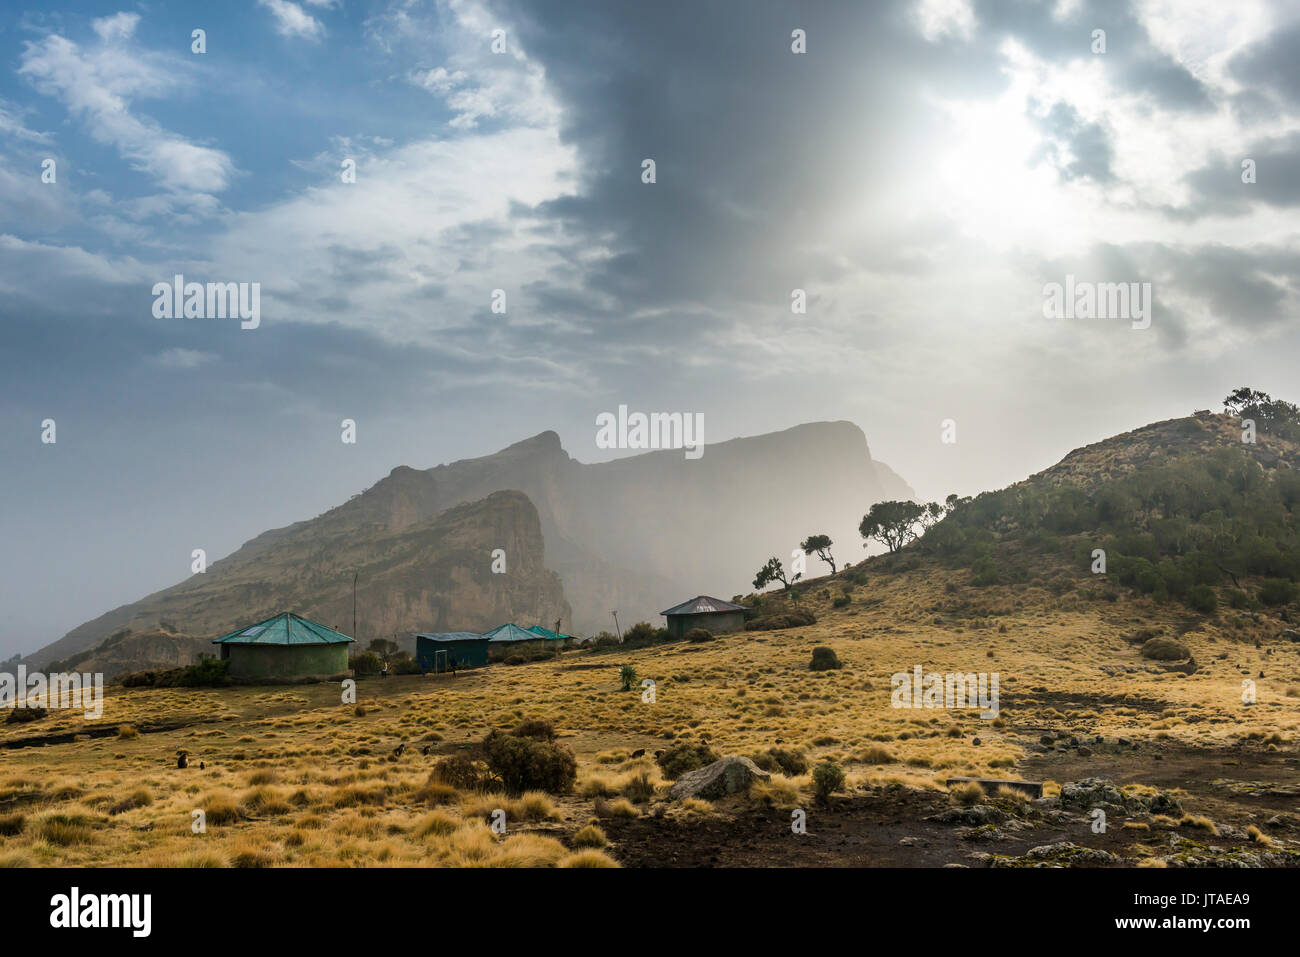 Tramonto sul Simien Mountains National Park, sito Patrimonio Mondiale dell'UNESCO, Debarq, Etiopia, Africa Foto Stock